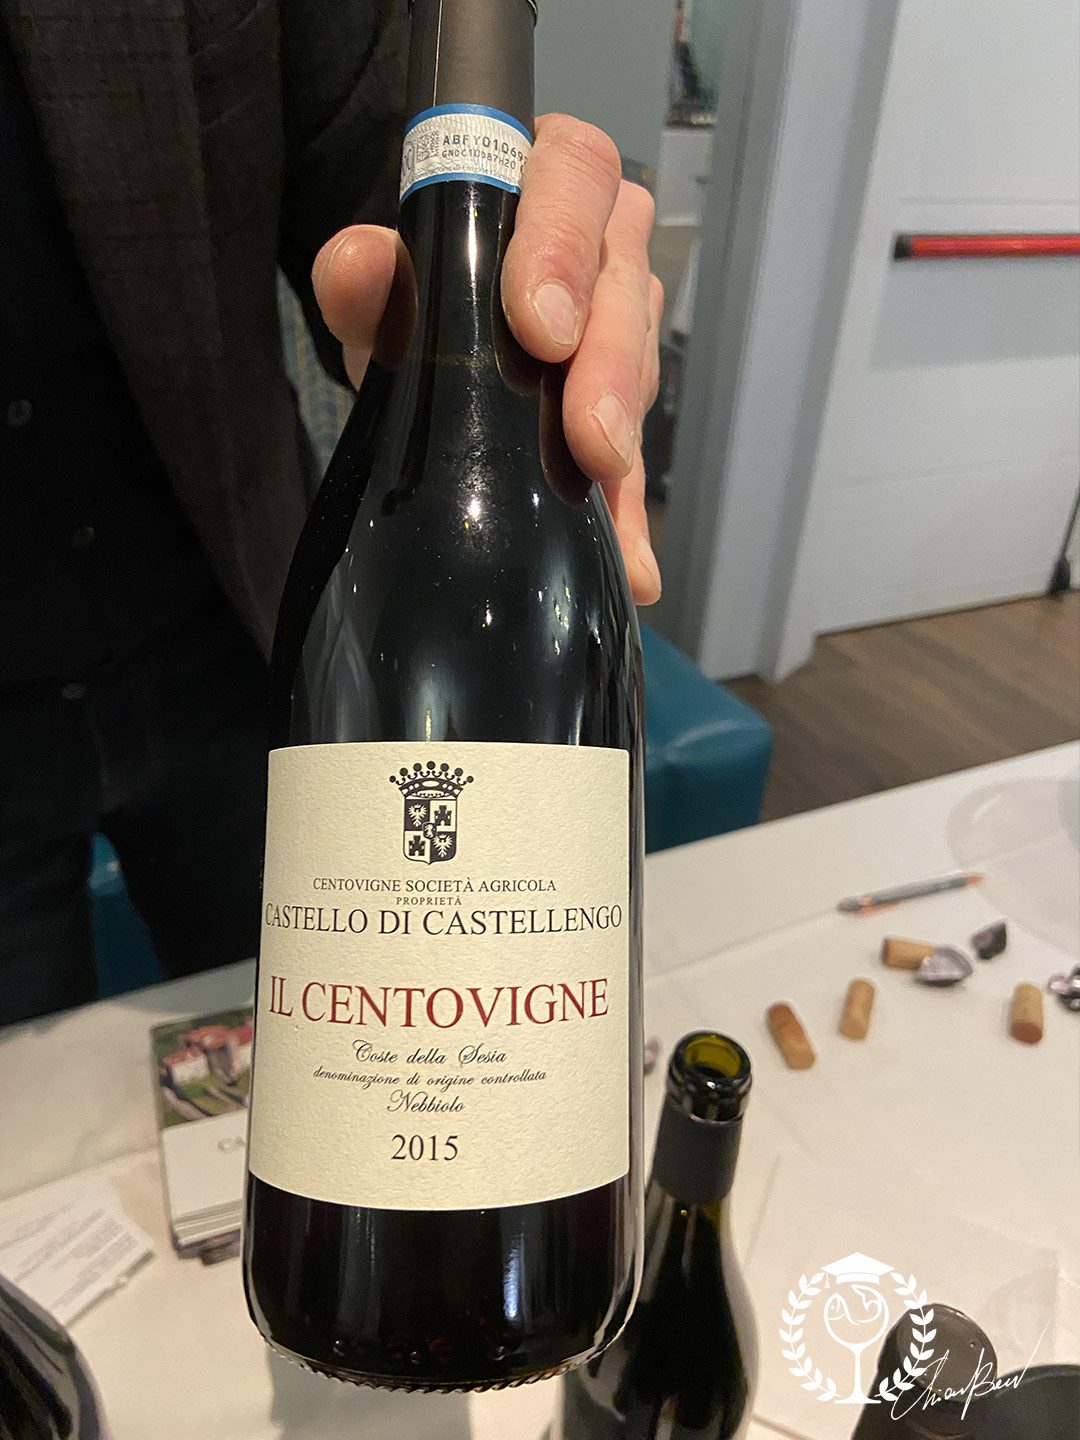 nebbiolo wines from piedmont centovigne